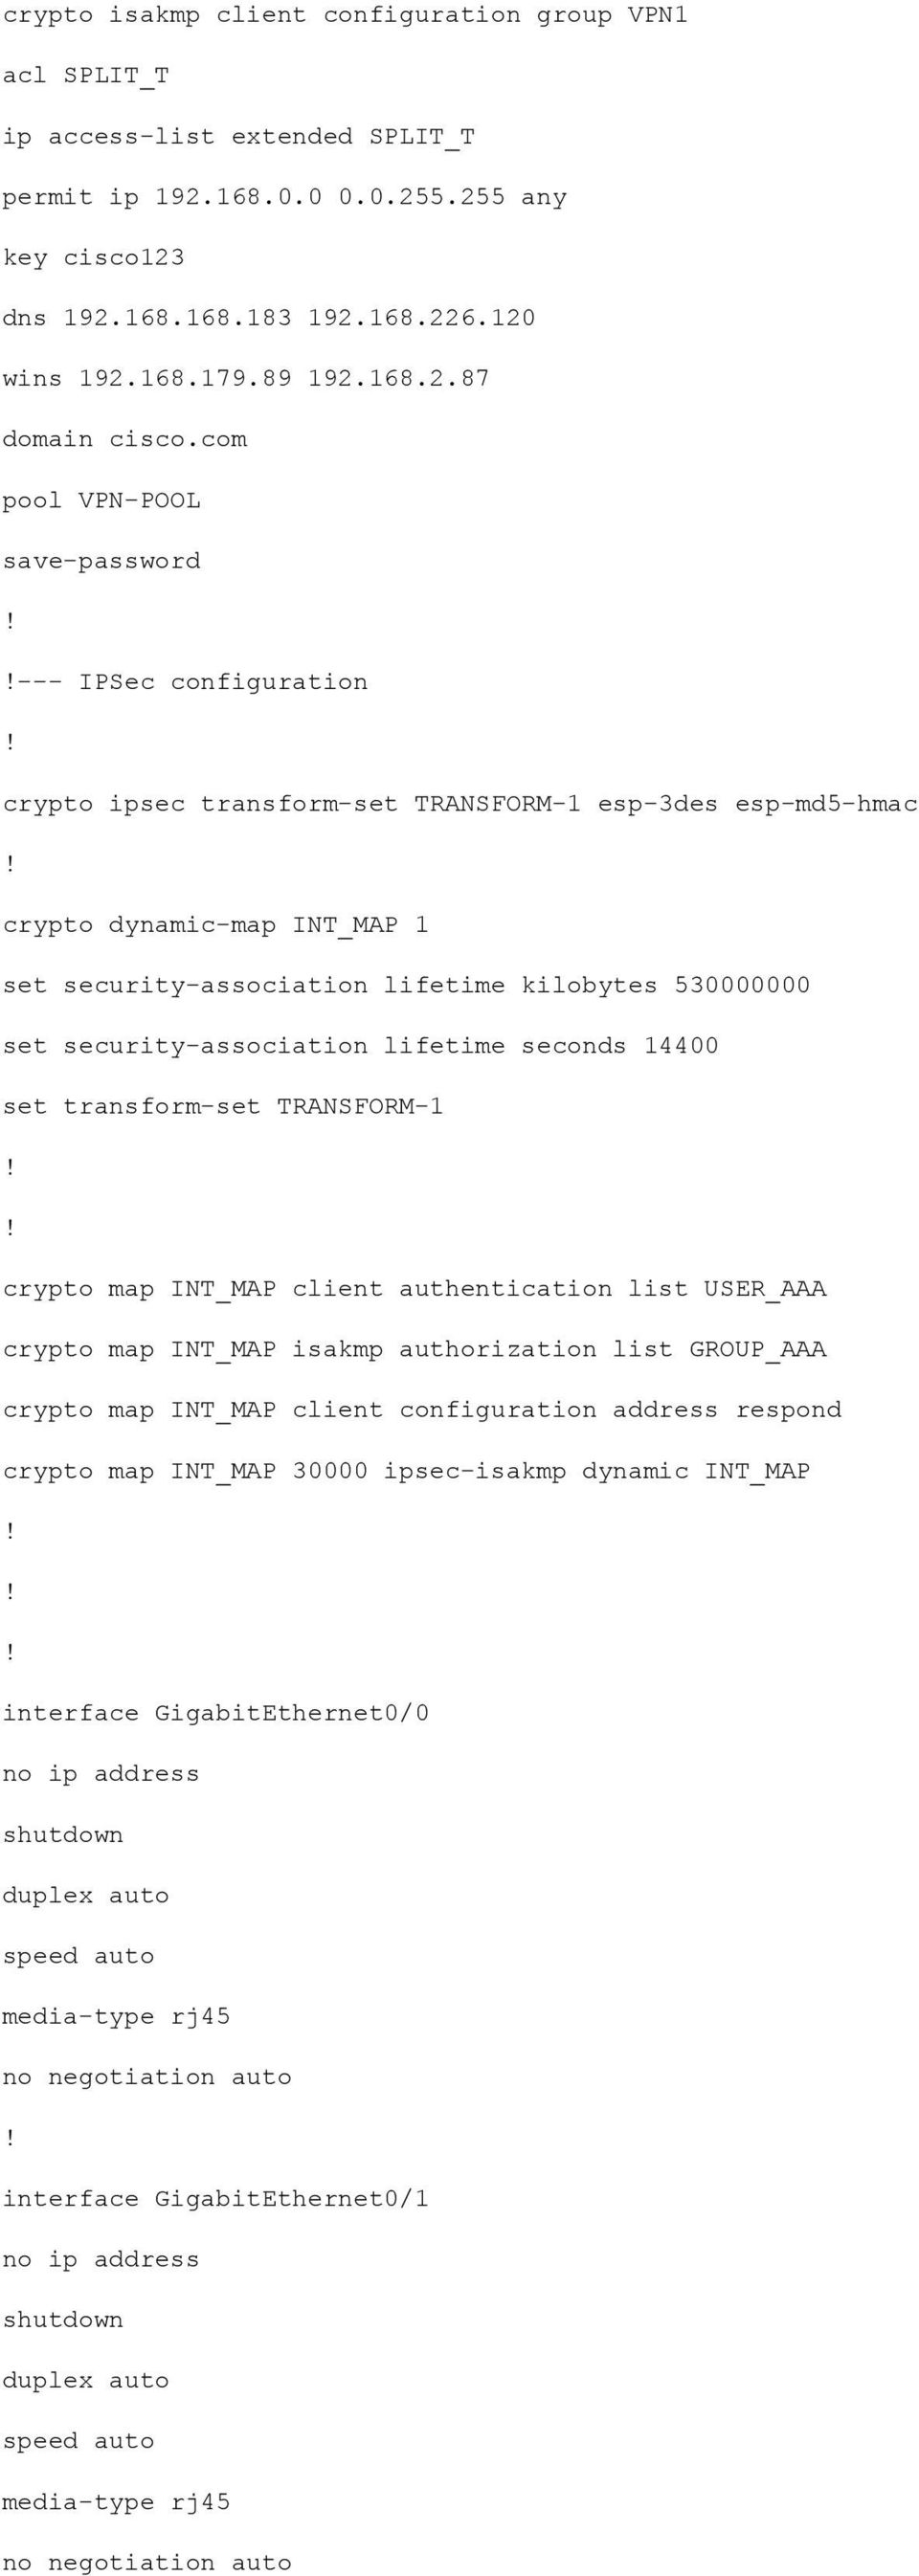 com pool VPN-POOL save-password --- IPSec configuration crypto ipsec transform-set TRANSFORM-1 esp-3des esp-md5-hmac crypto dynamic-map INT_MAP 1 set security-association lifetime kilobytes 530000000